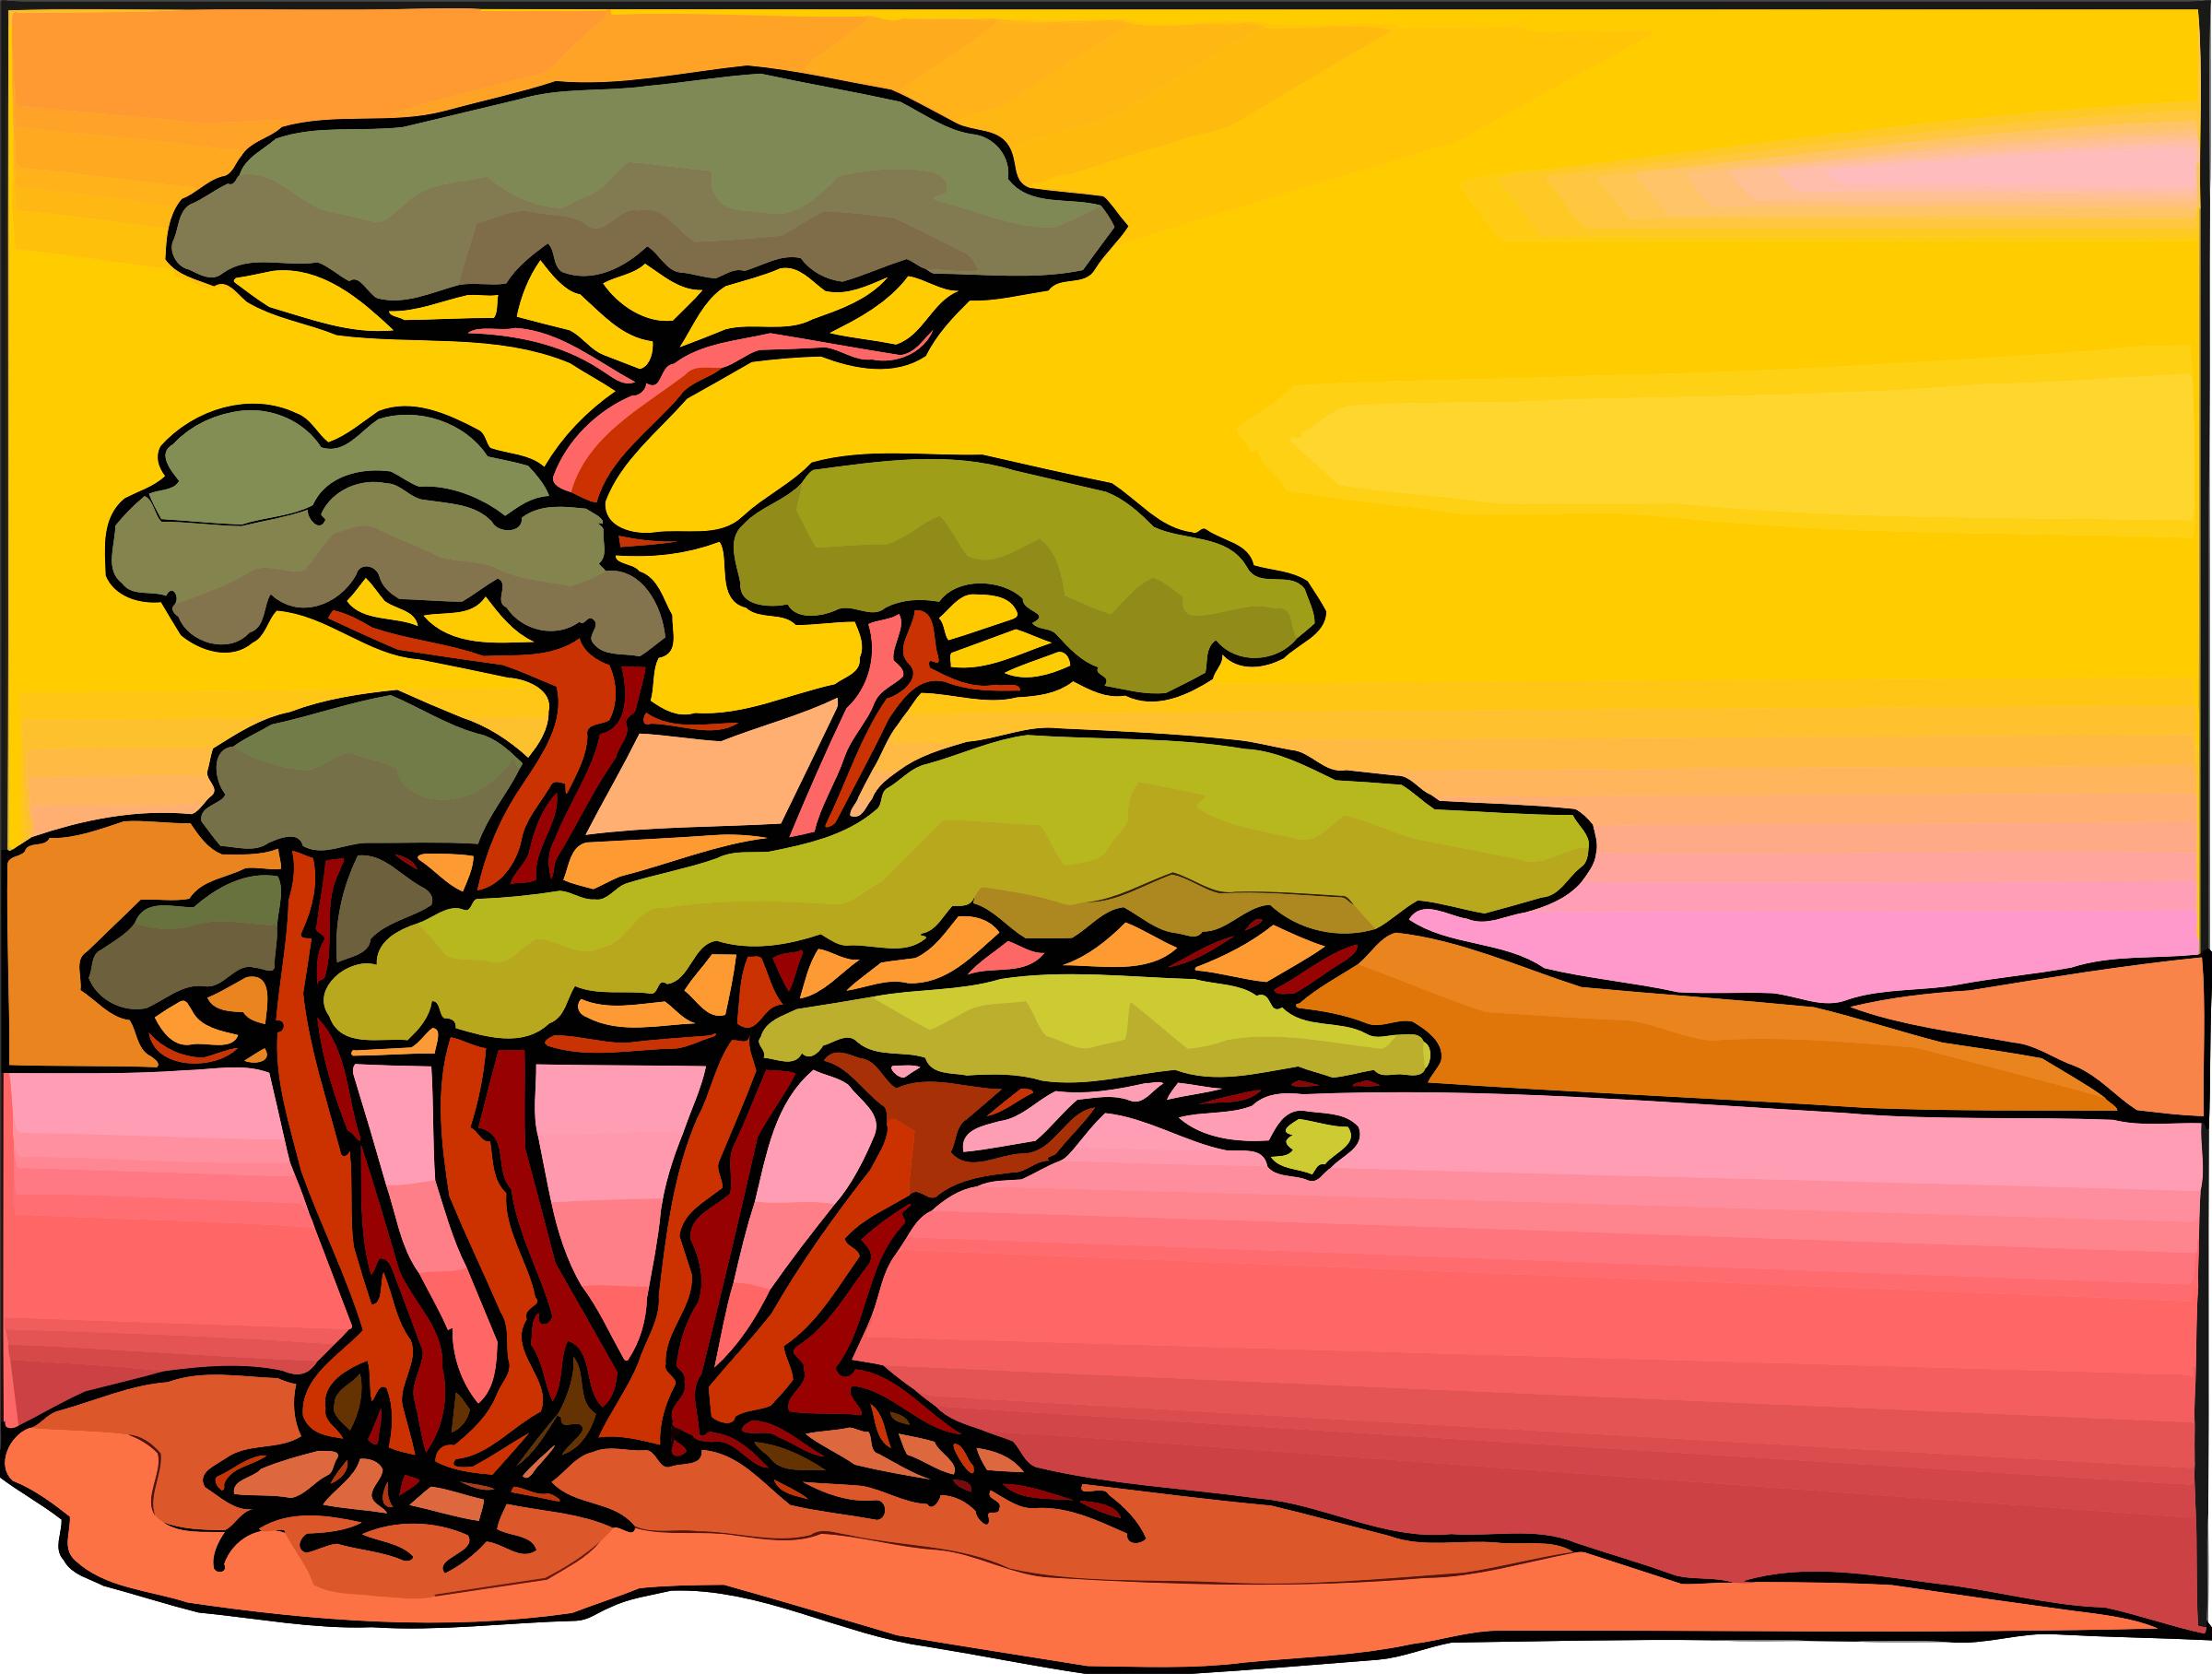 Tree image icons